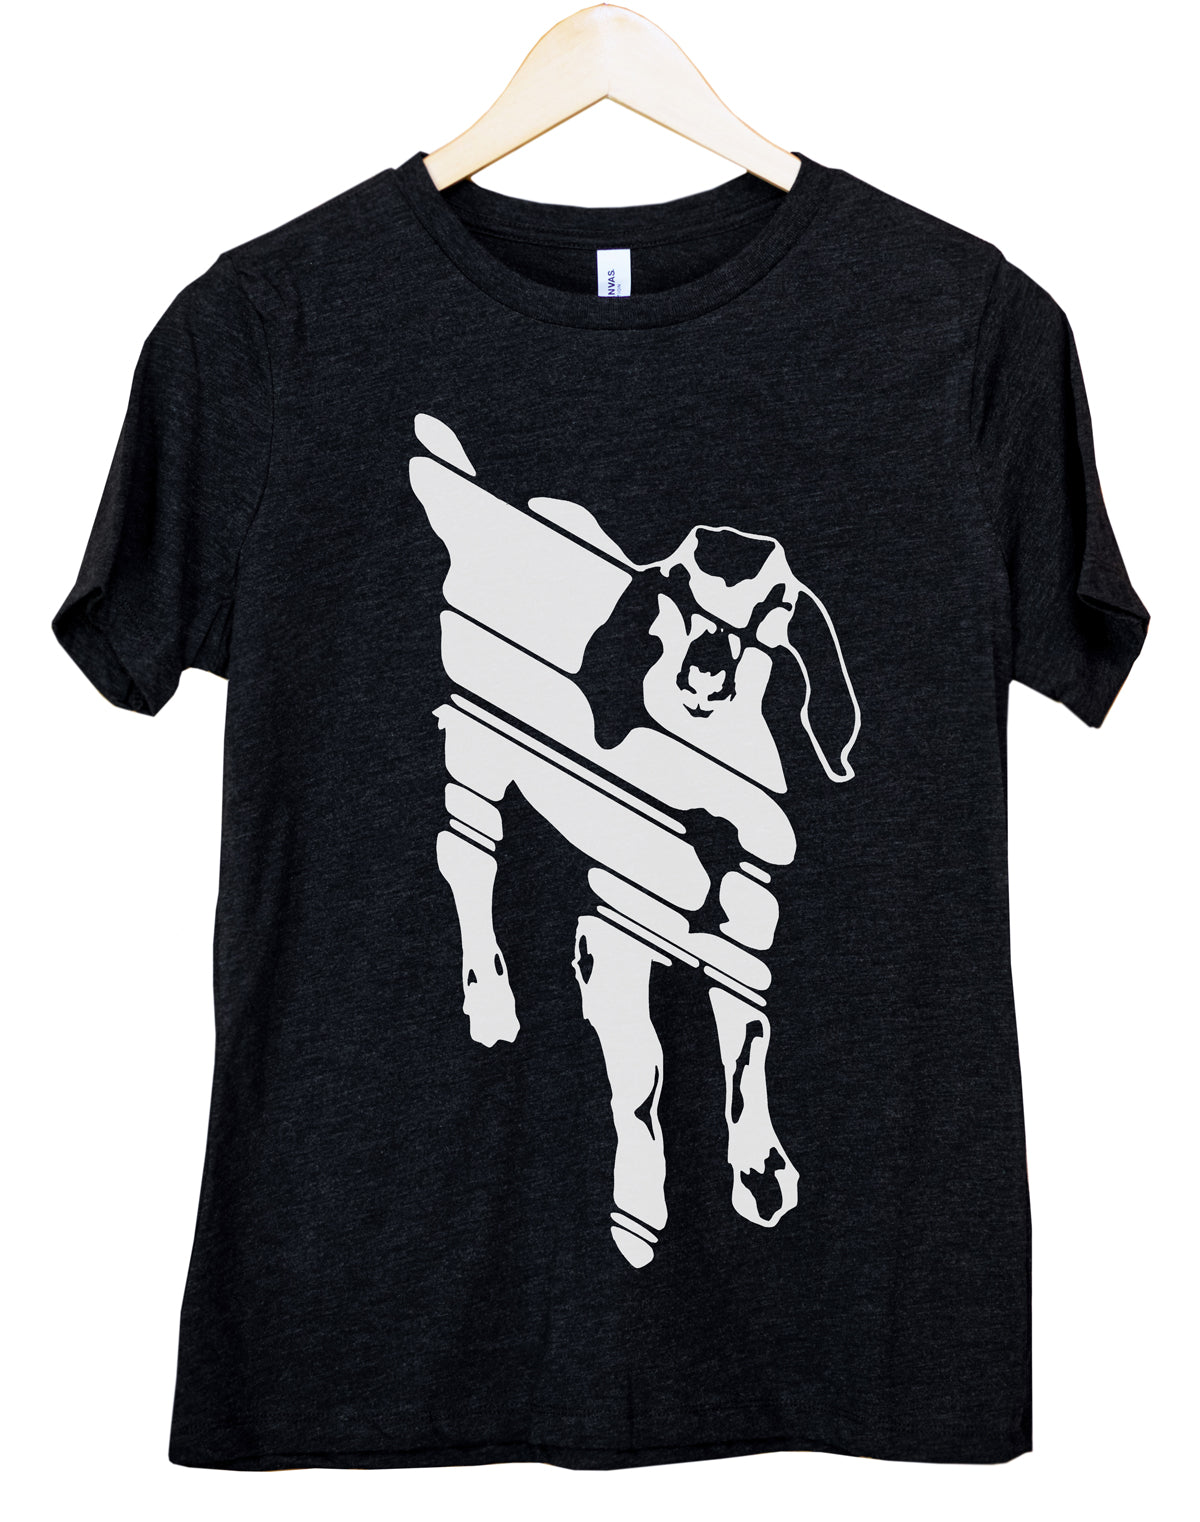 Goat - Women's Graphic T-Shirt